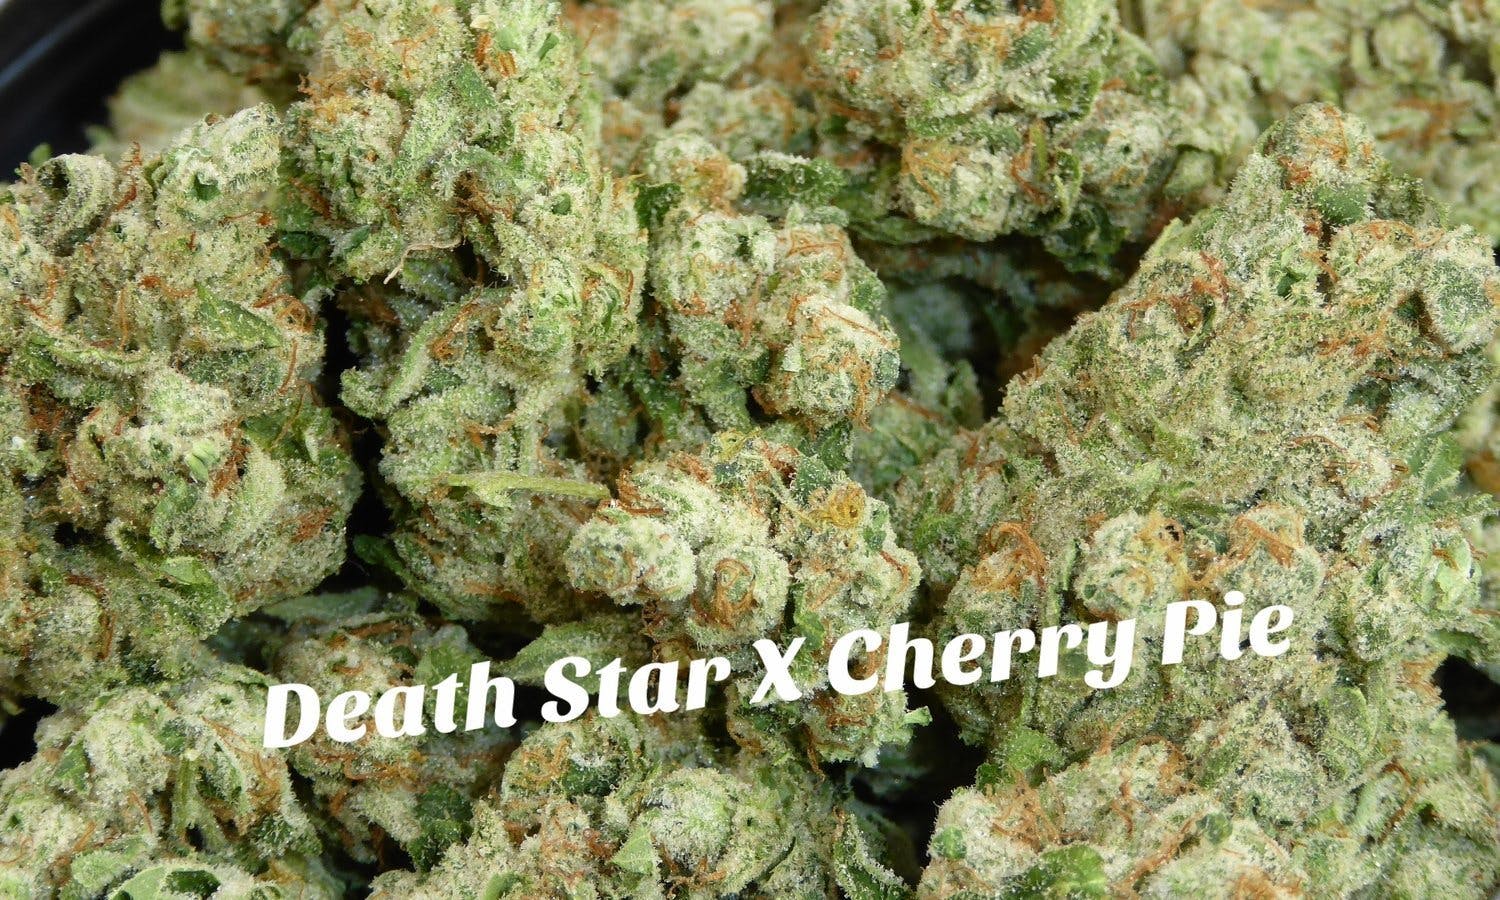 marijuana-dispensaries-22279-alessandro-blvd-moreno-valley-death-star-2b-cherry-pie